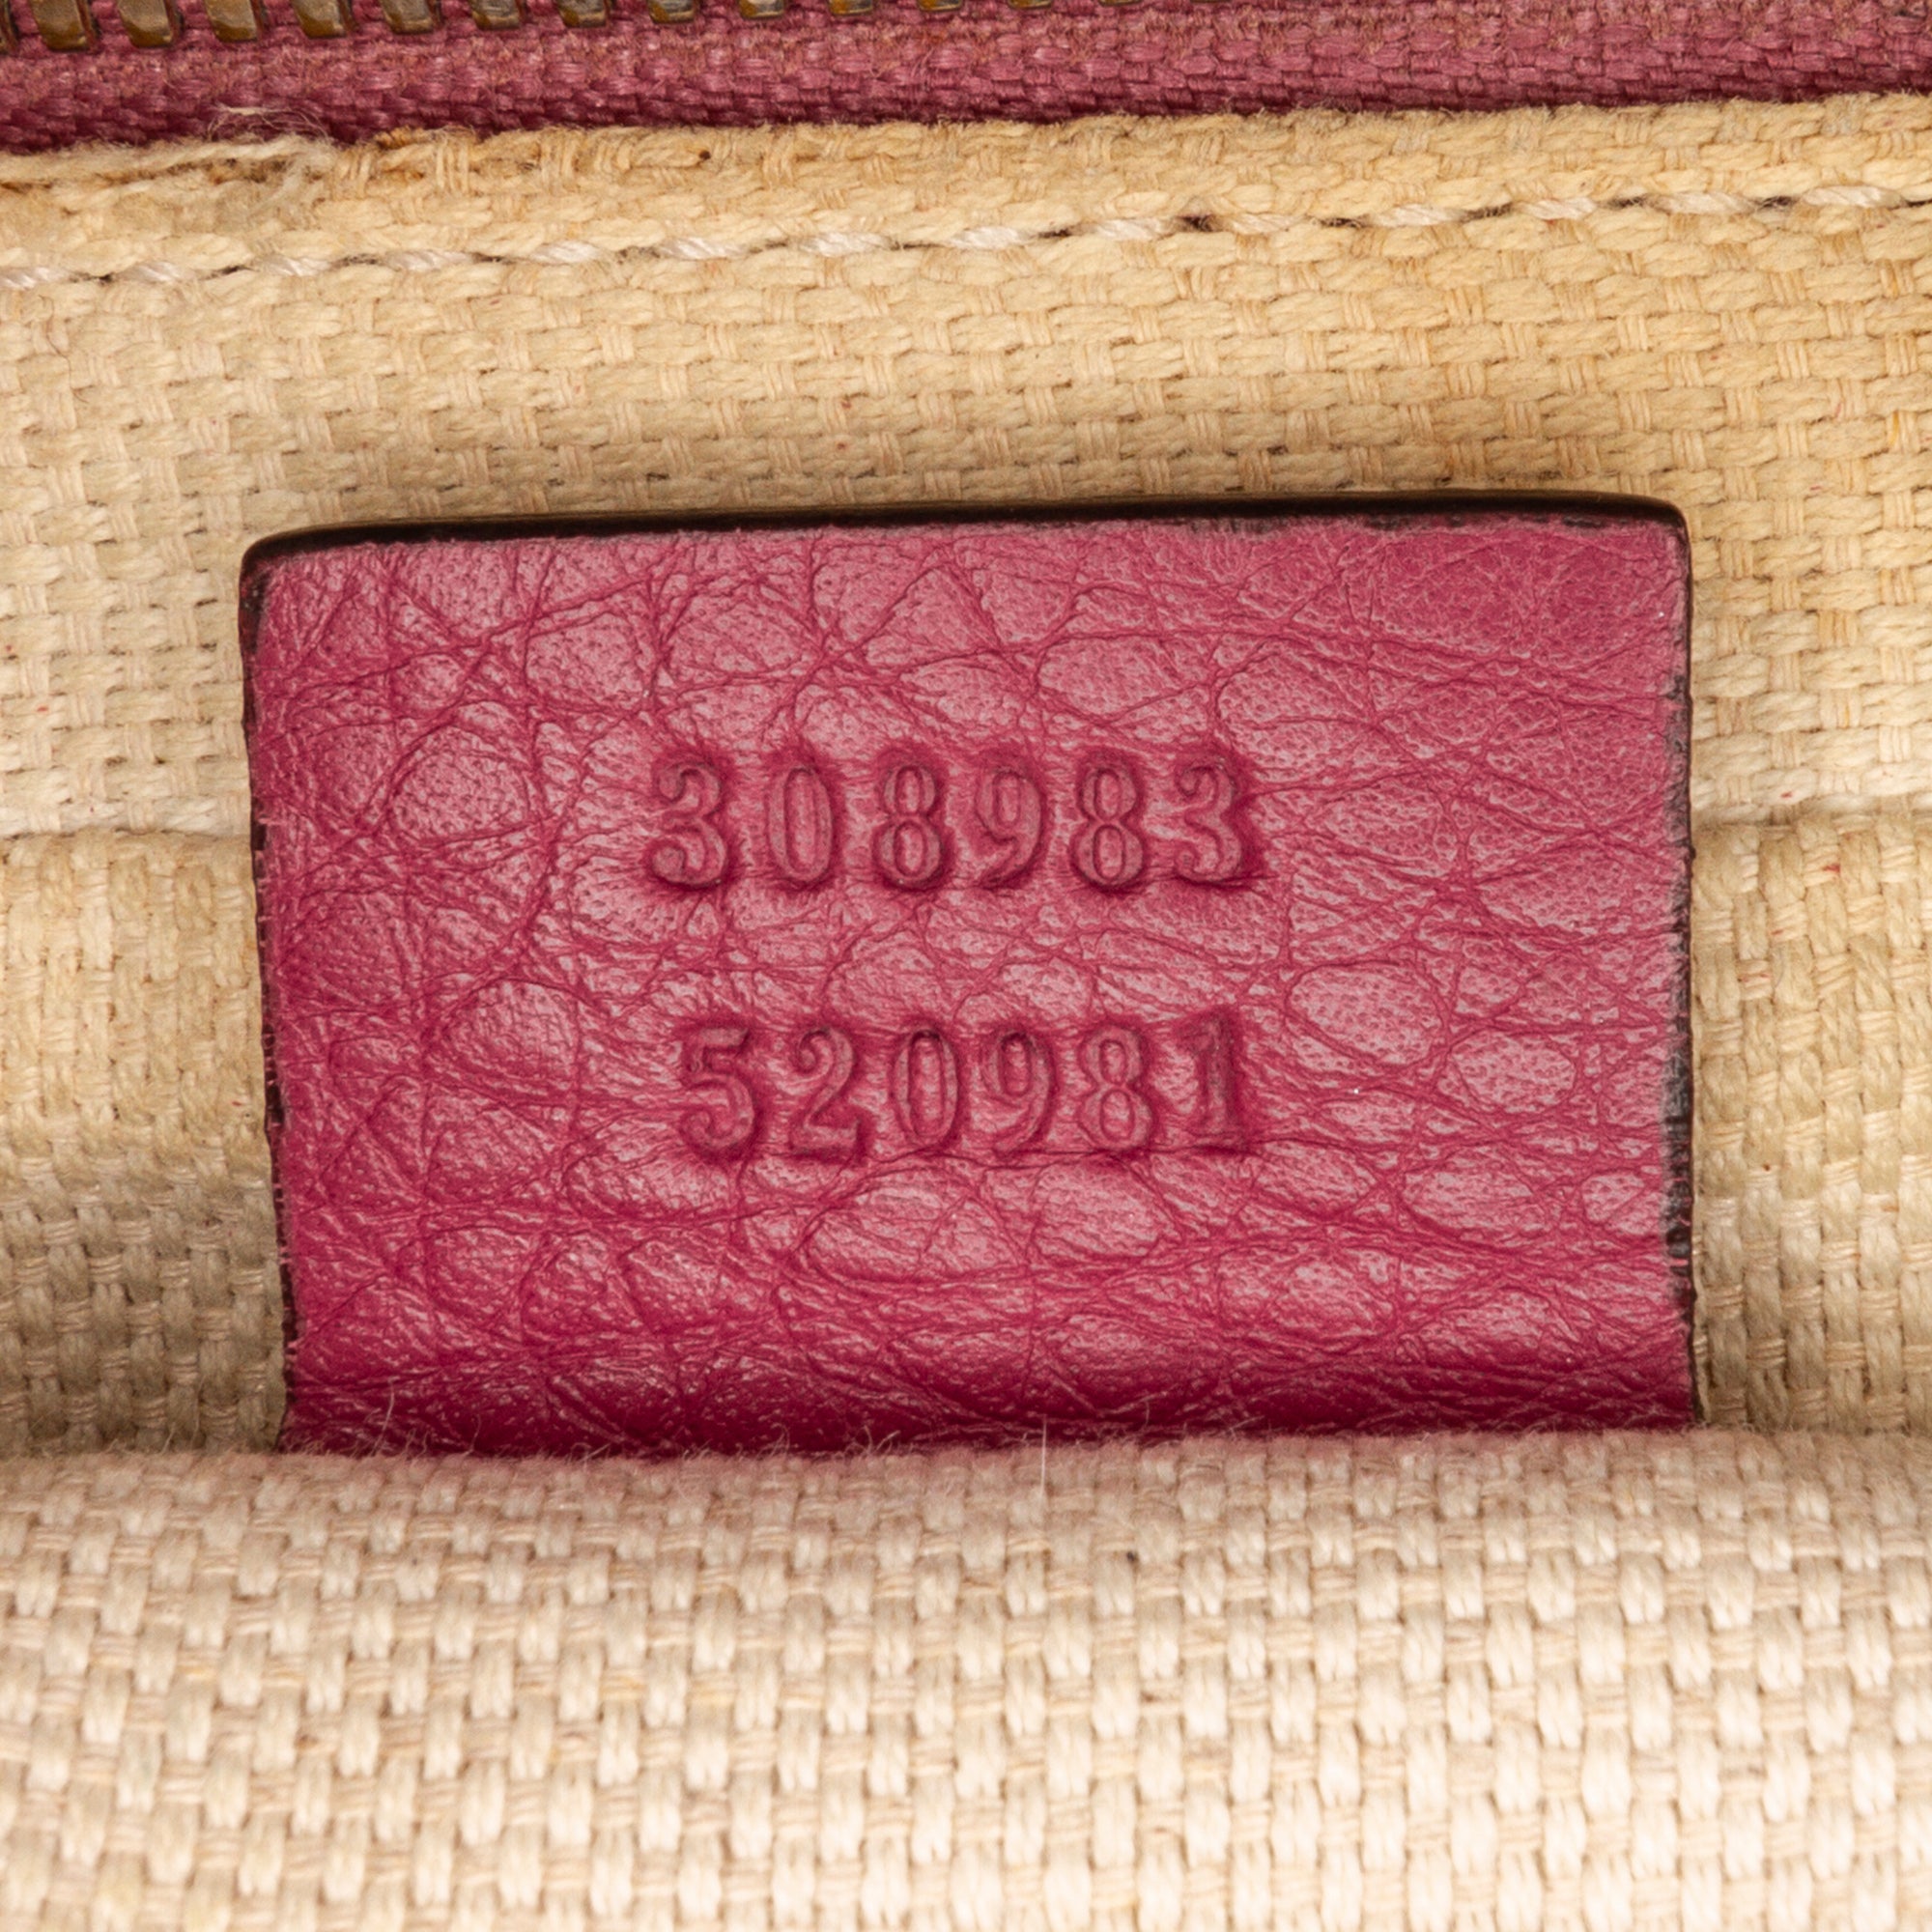 Gucci Pink Vintage Luggage